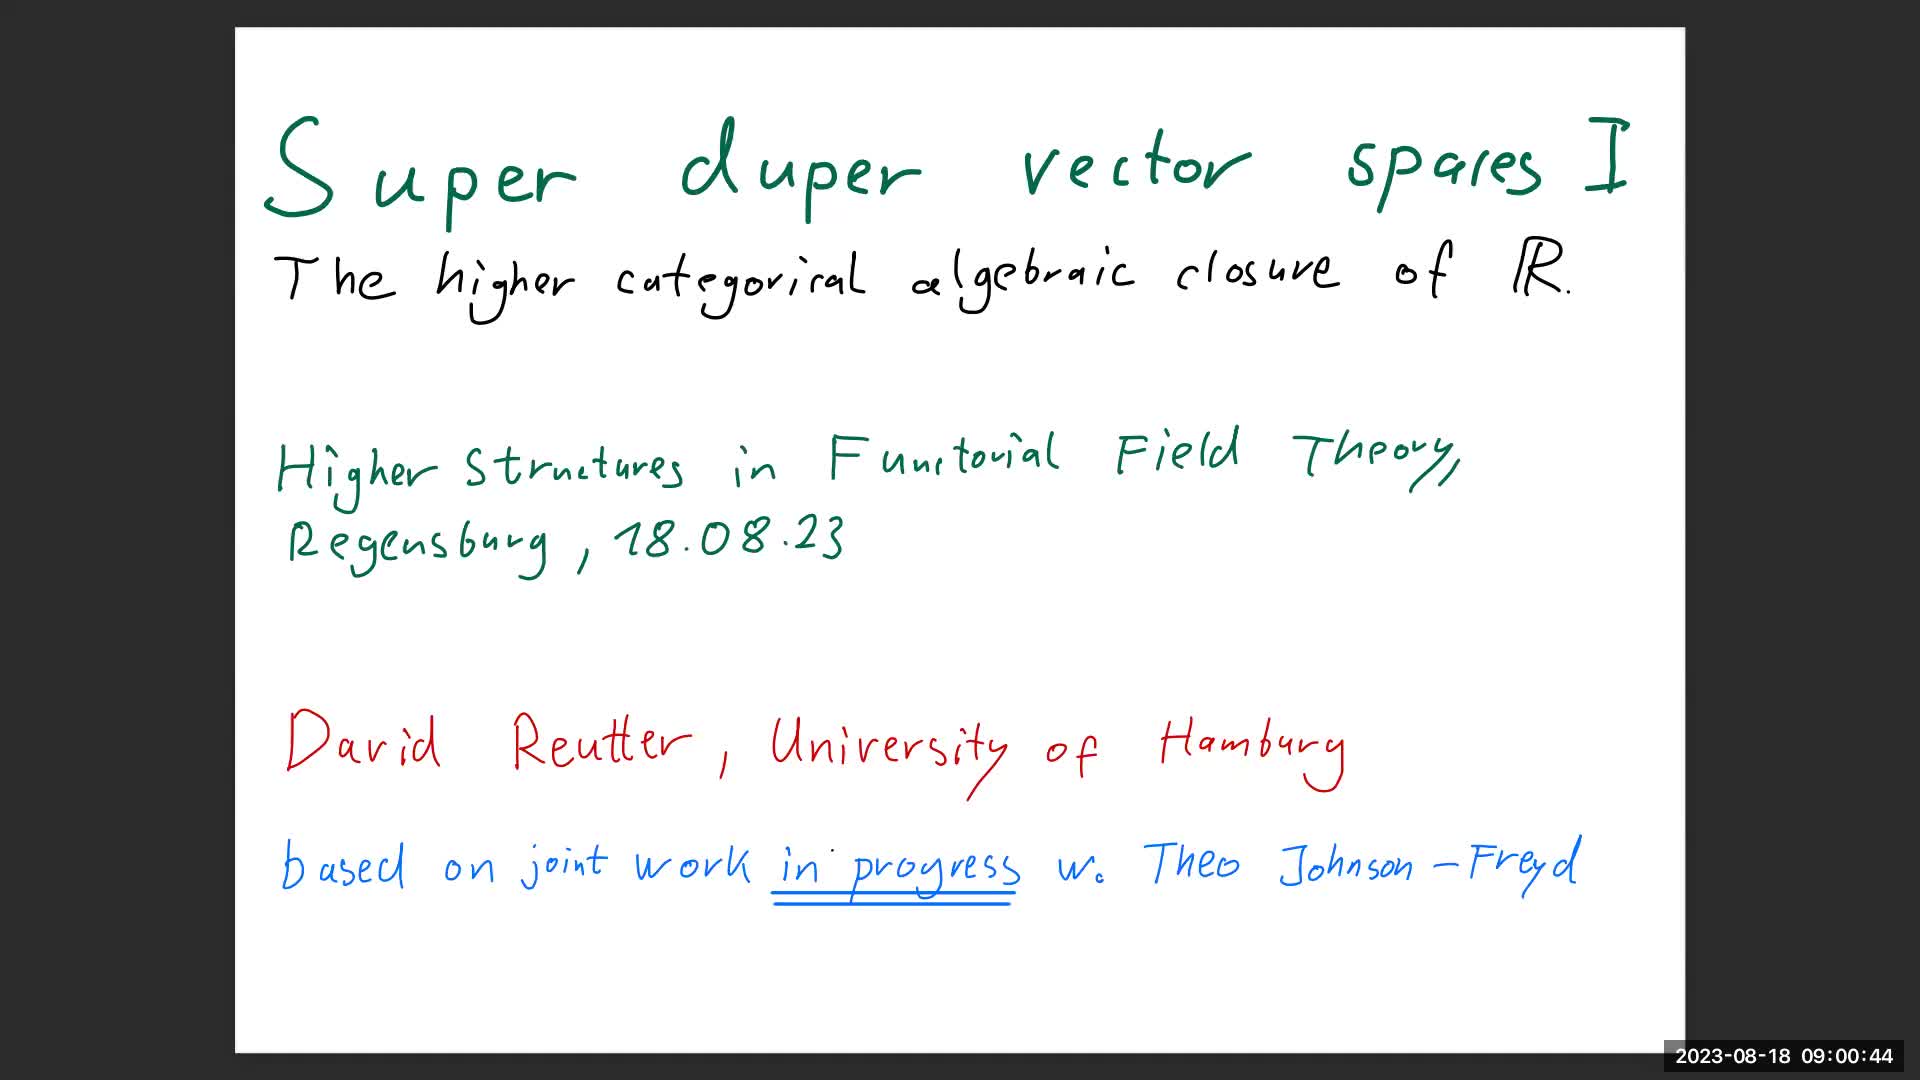 David Reuter: Super duper vector spaces I --- The higher-categorical algebraic closure of the complex numbers